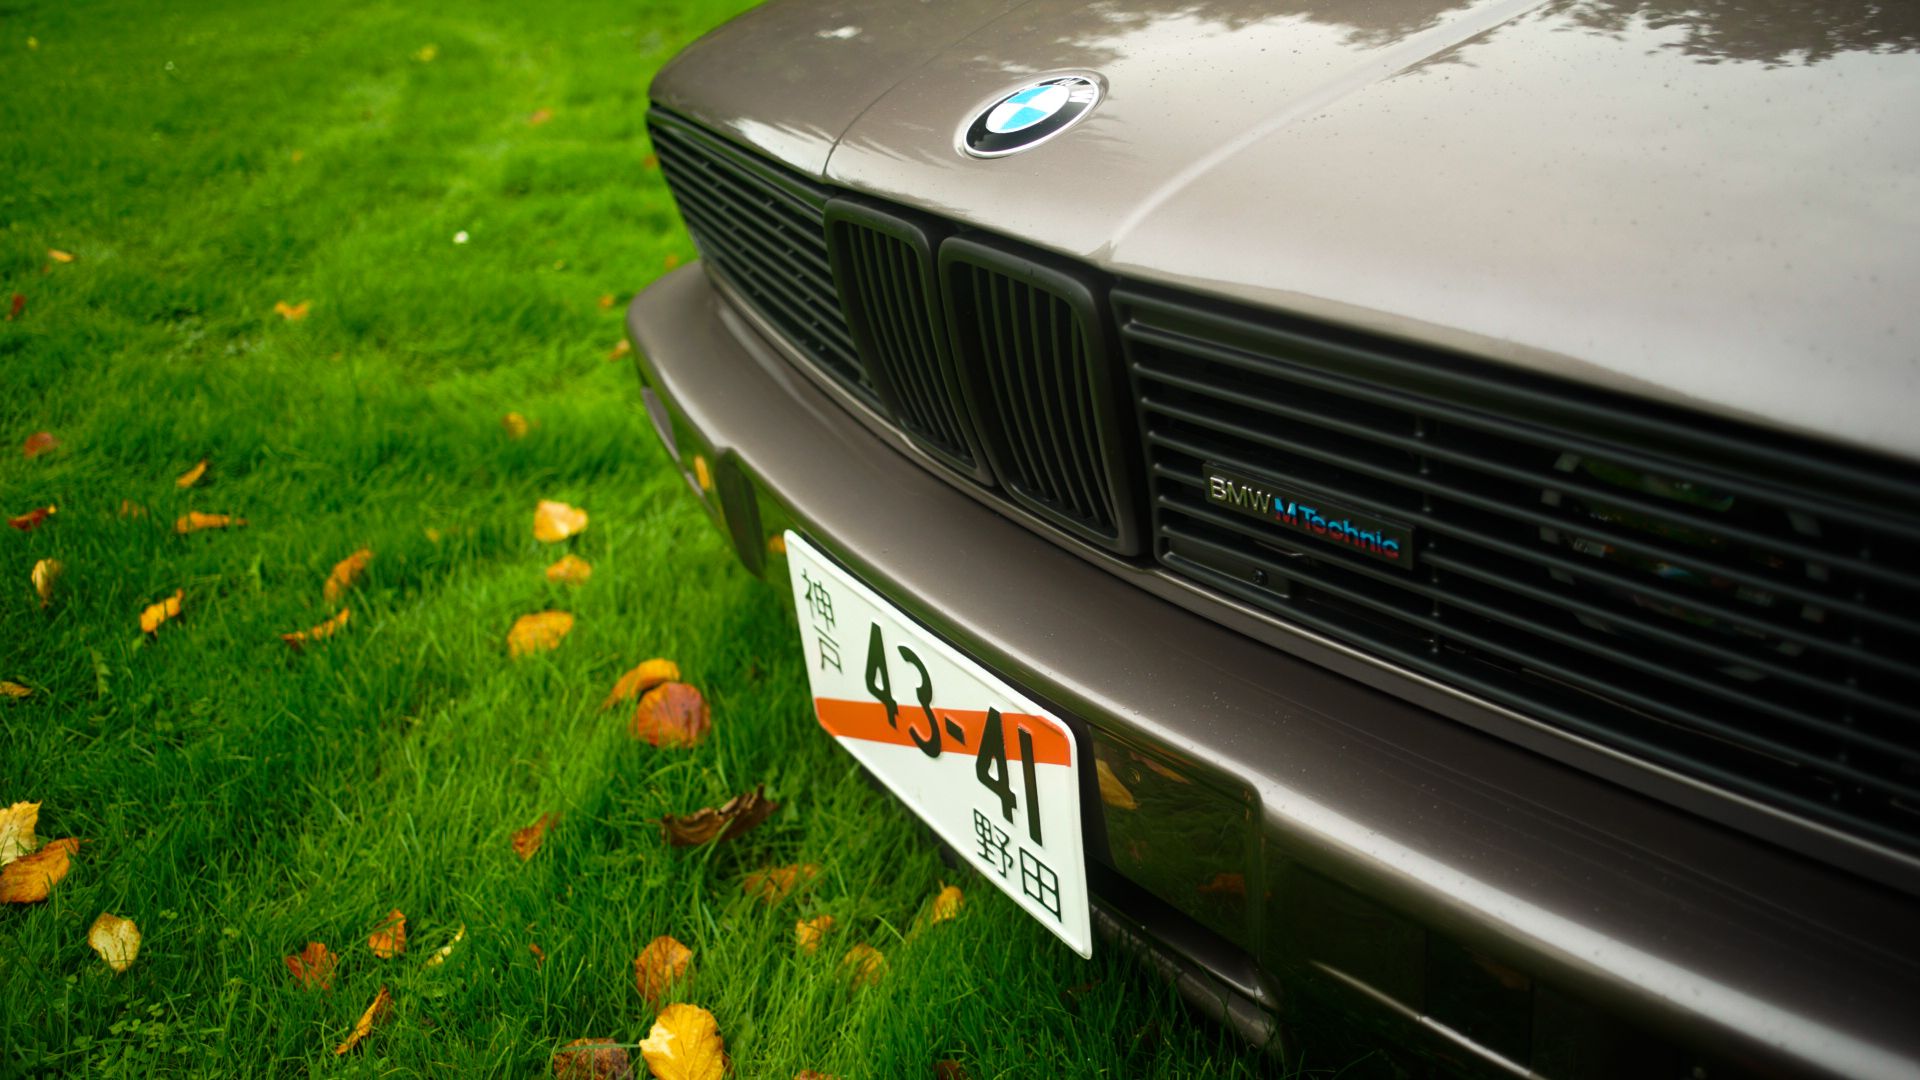 BMW E30 Custom front headlight grill kit